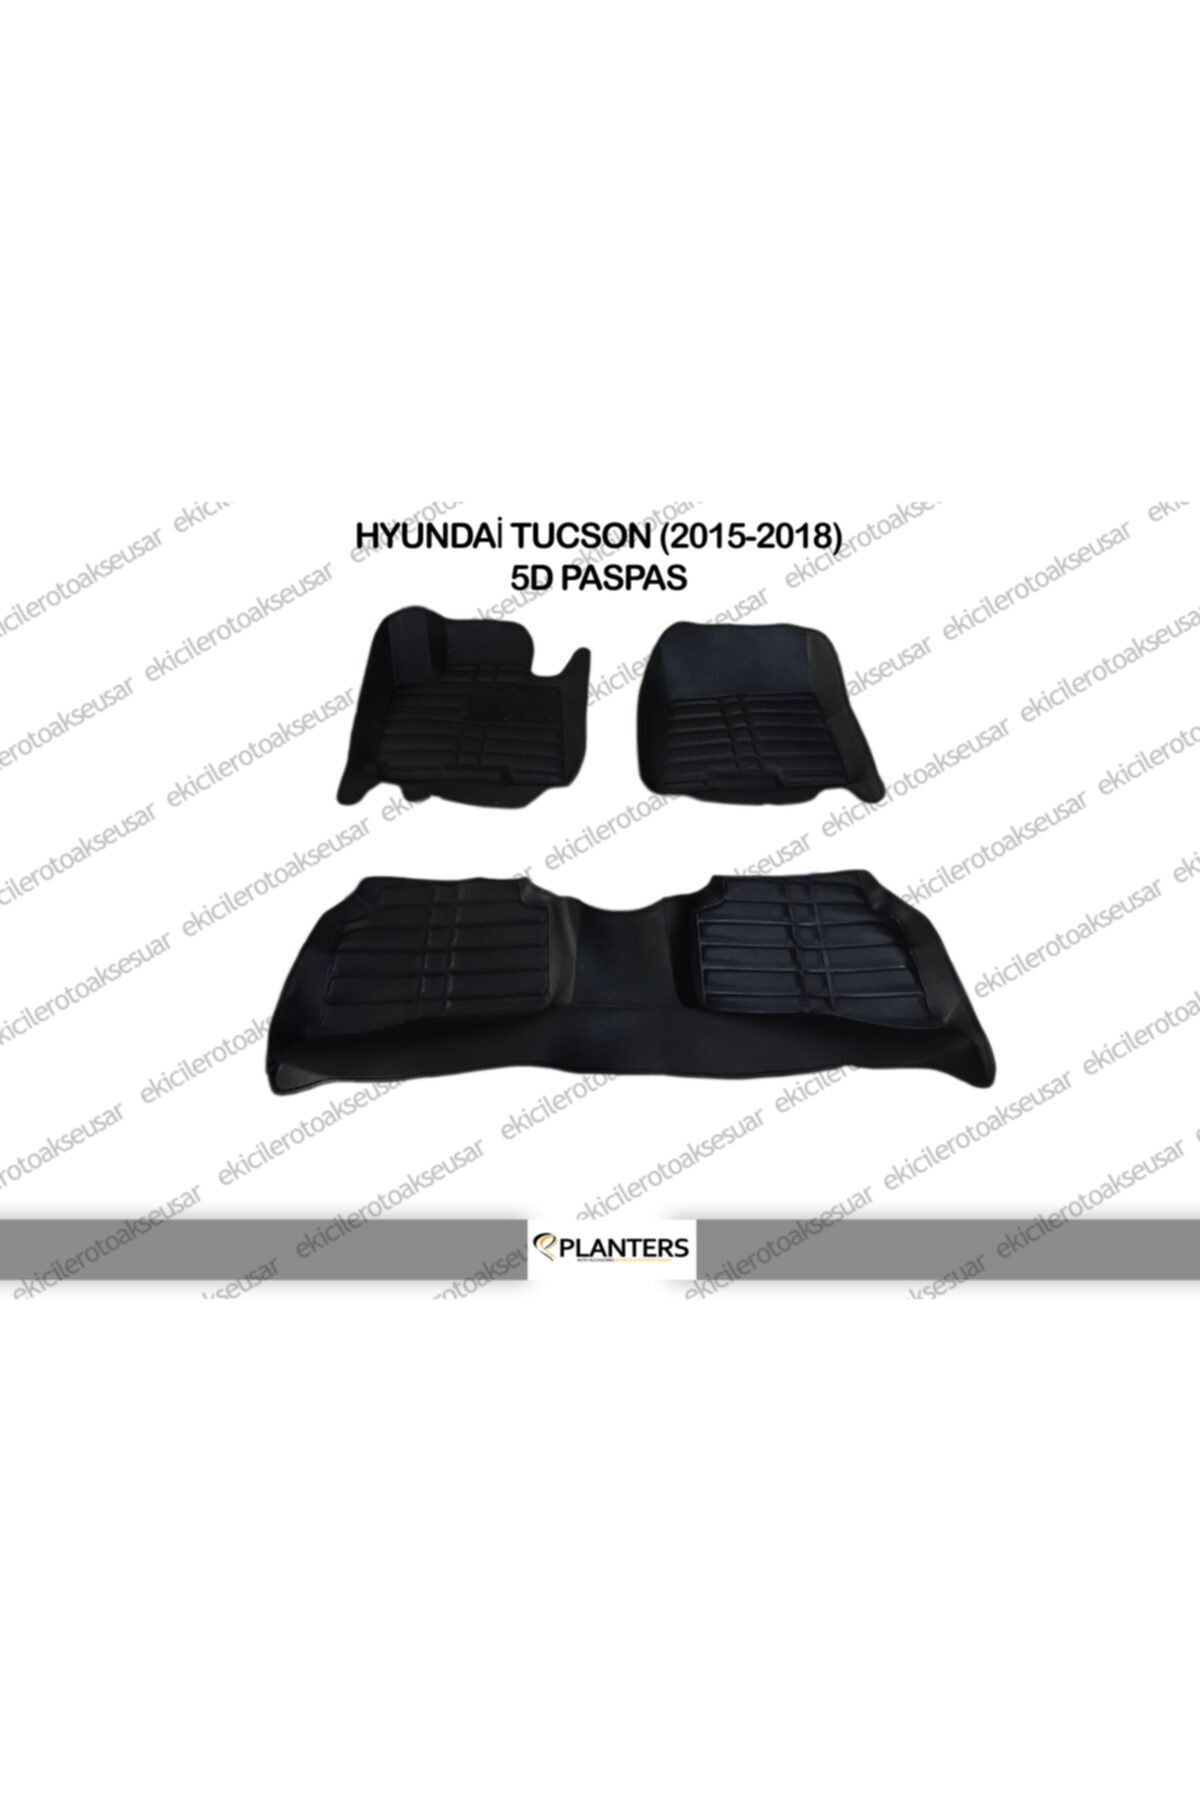 EKİCİLER Hyundai Tucson 5d Paspas Siyah(2015-sonrası)